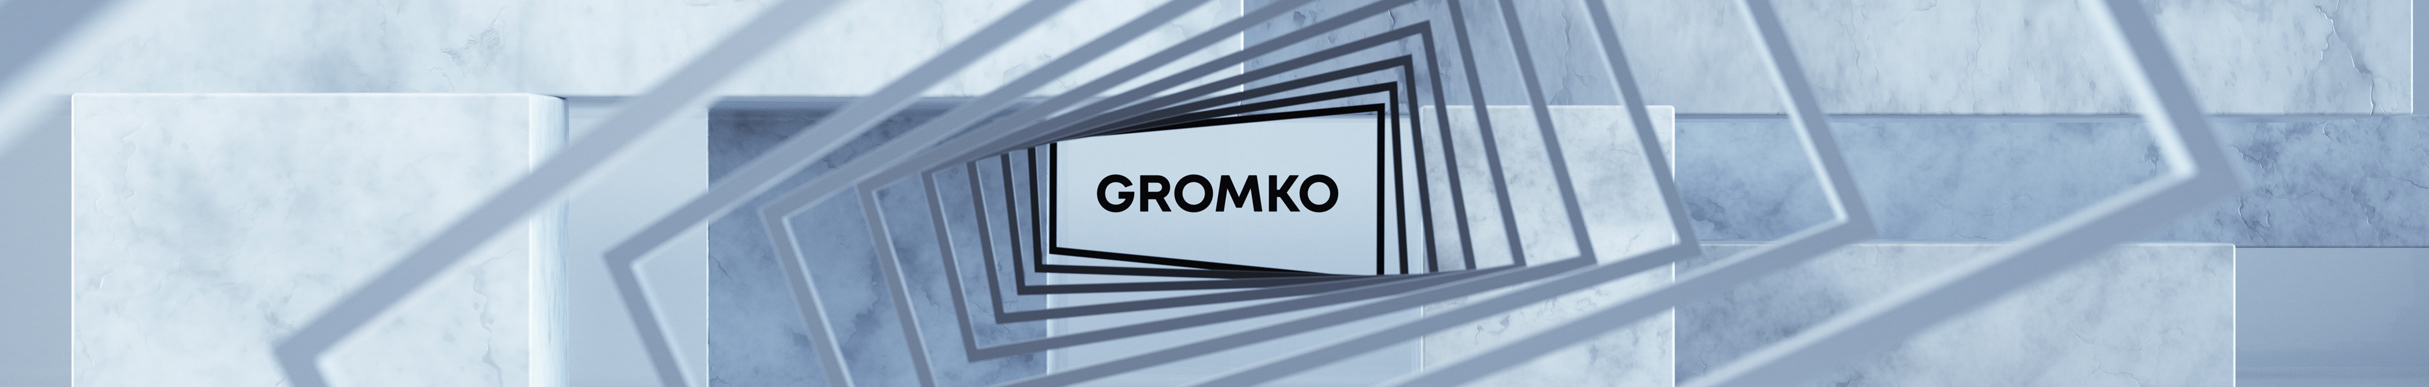 GROMKO video's profile banner